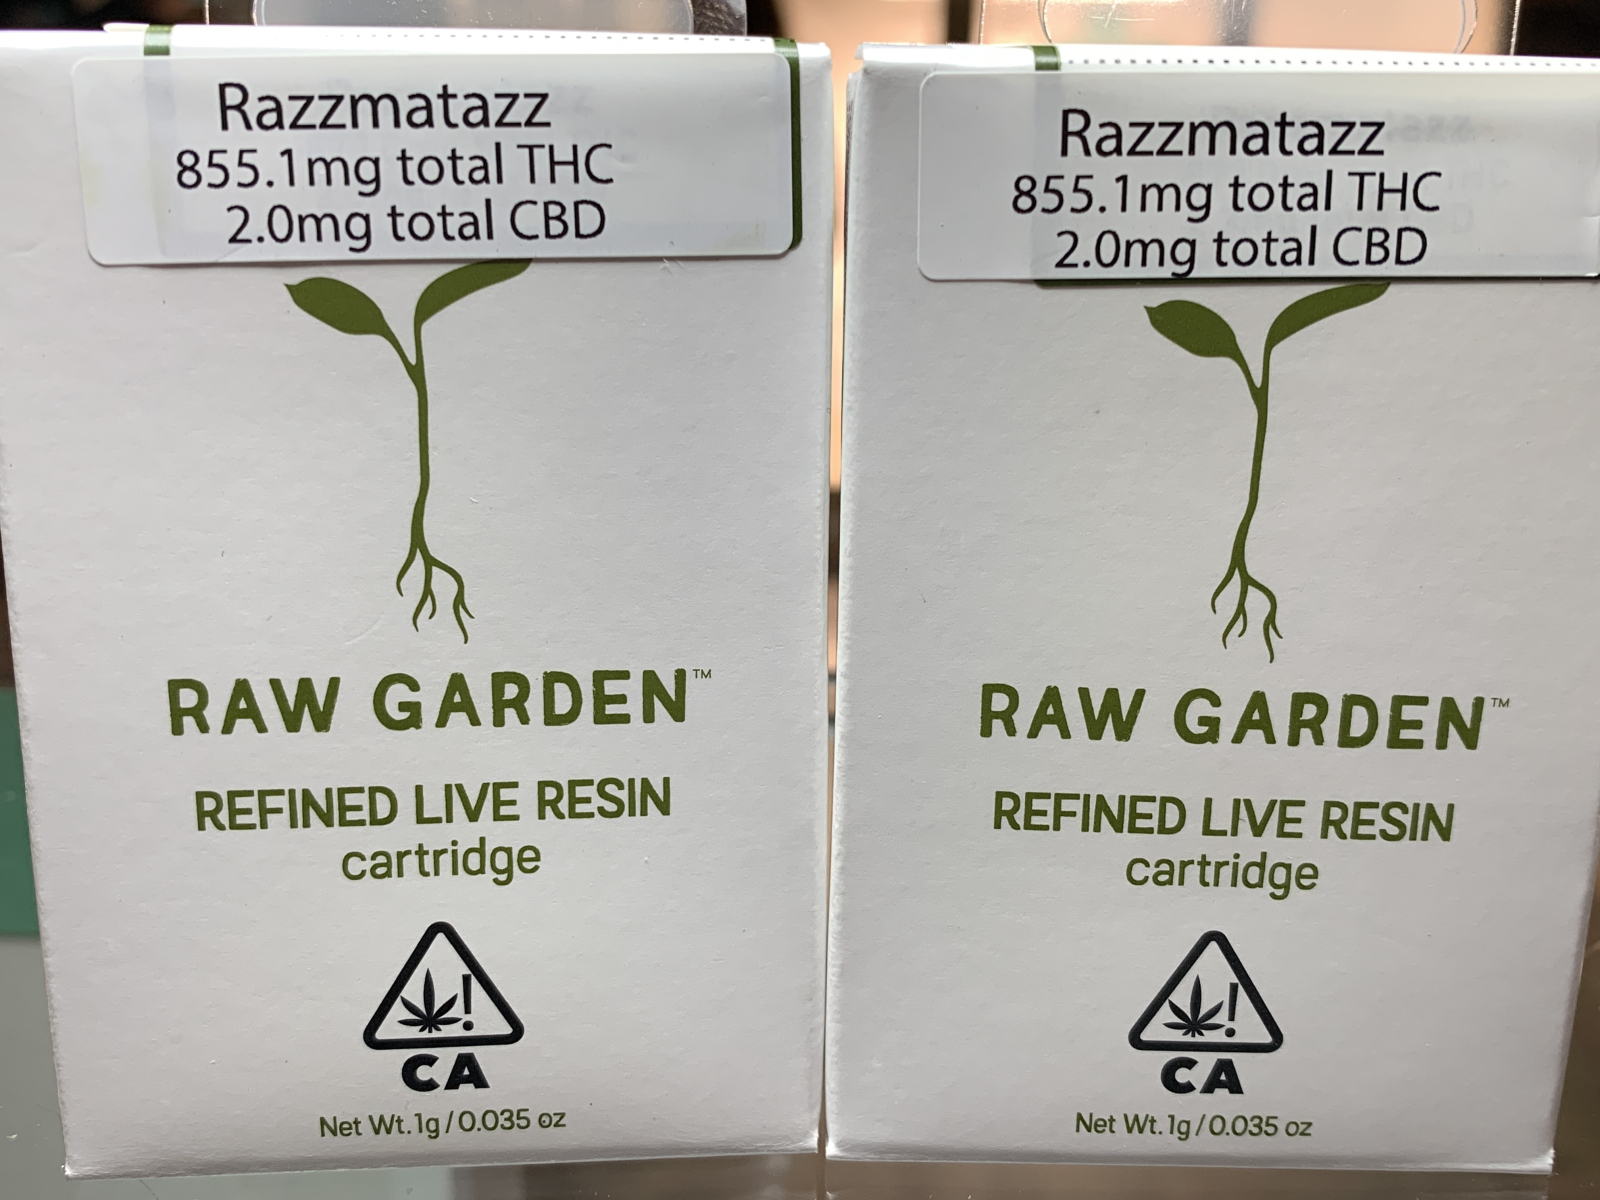 Raw Garden Razzmatazz full gram cartridge